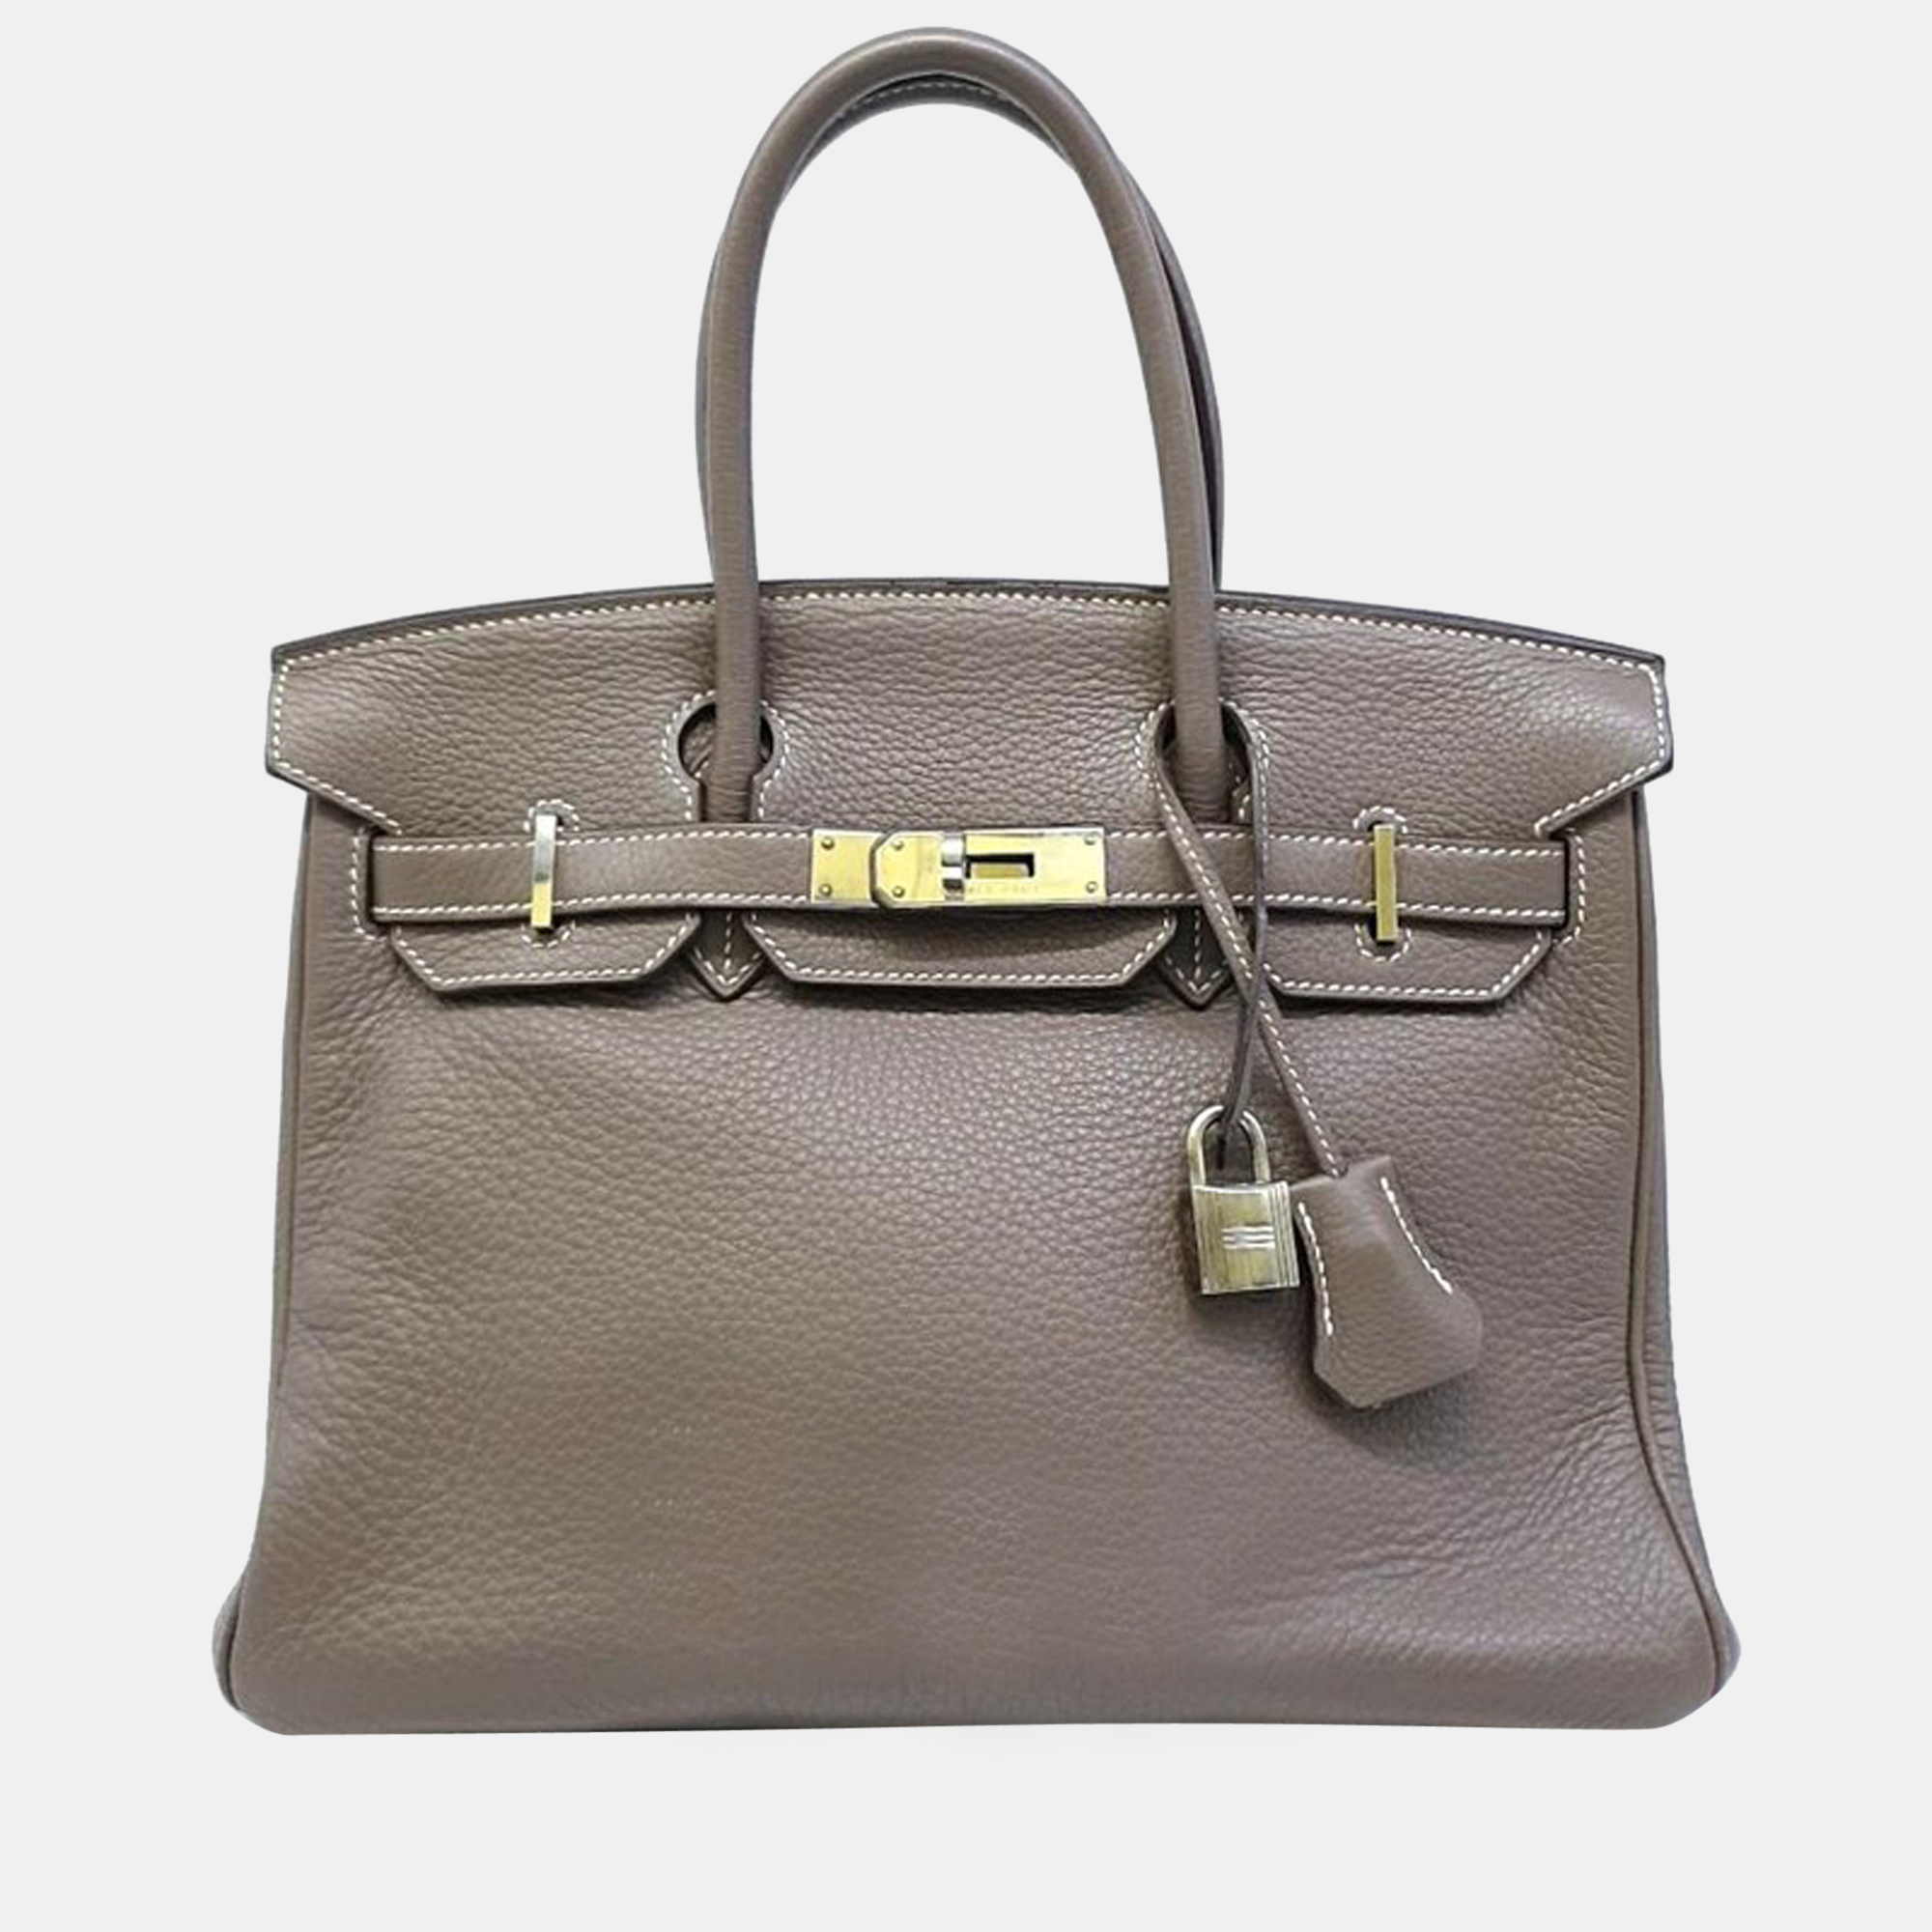 Hermes brown leather birkin 30 bag